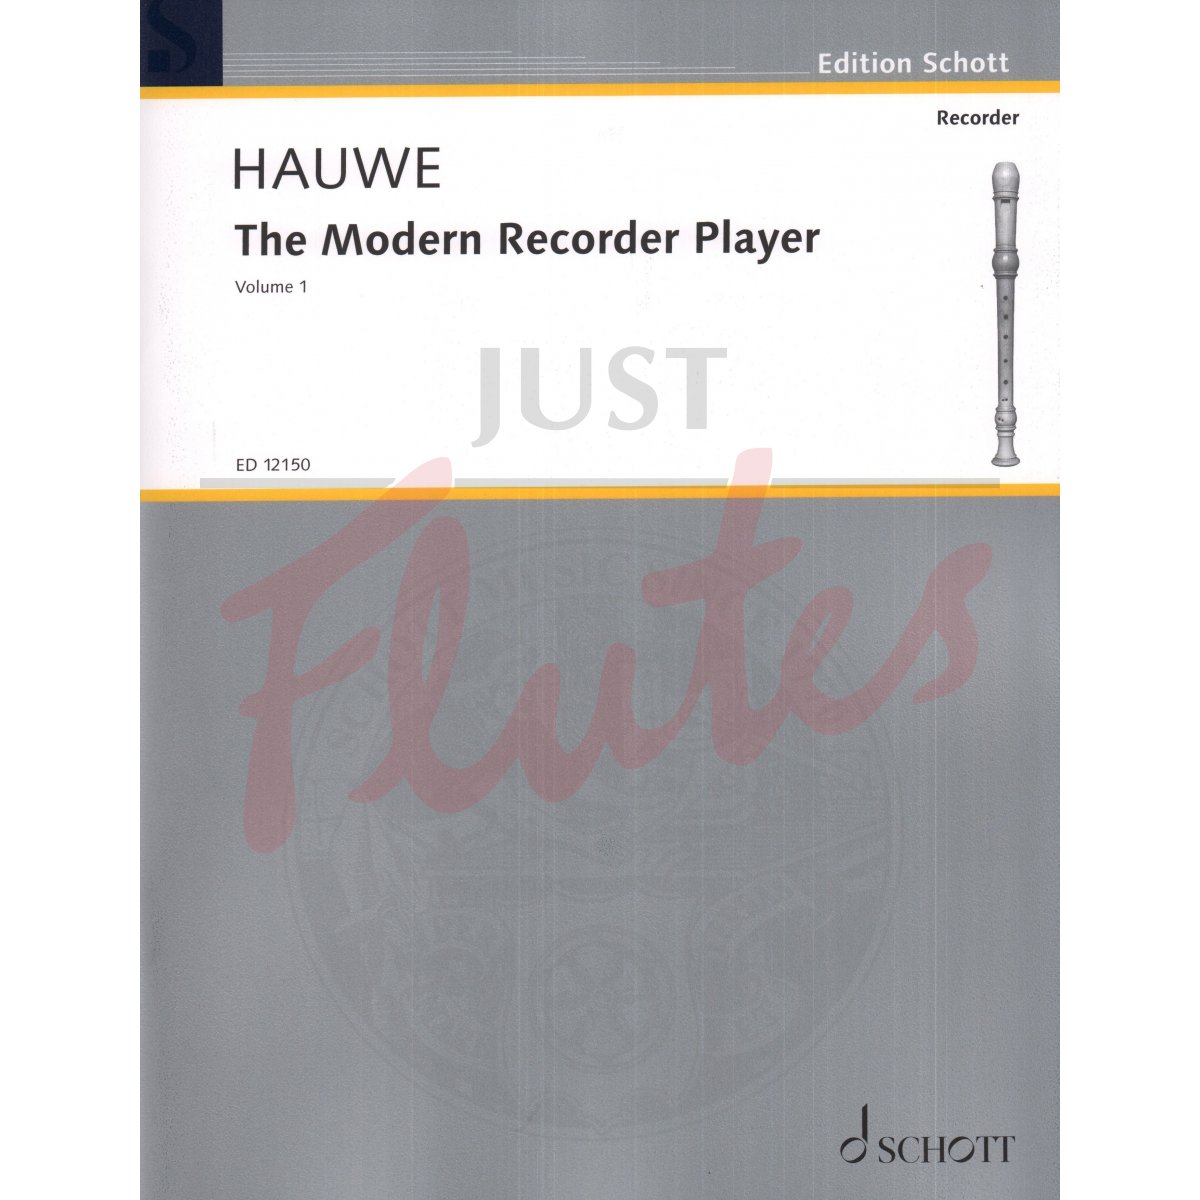 The Modern Recorder Player Vol.1